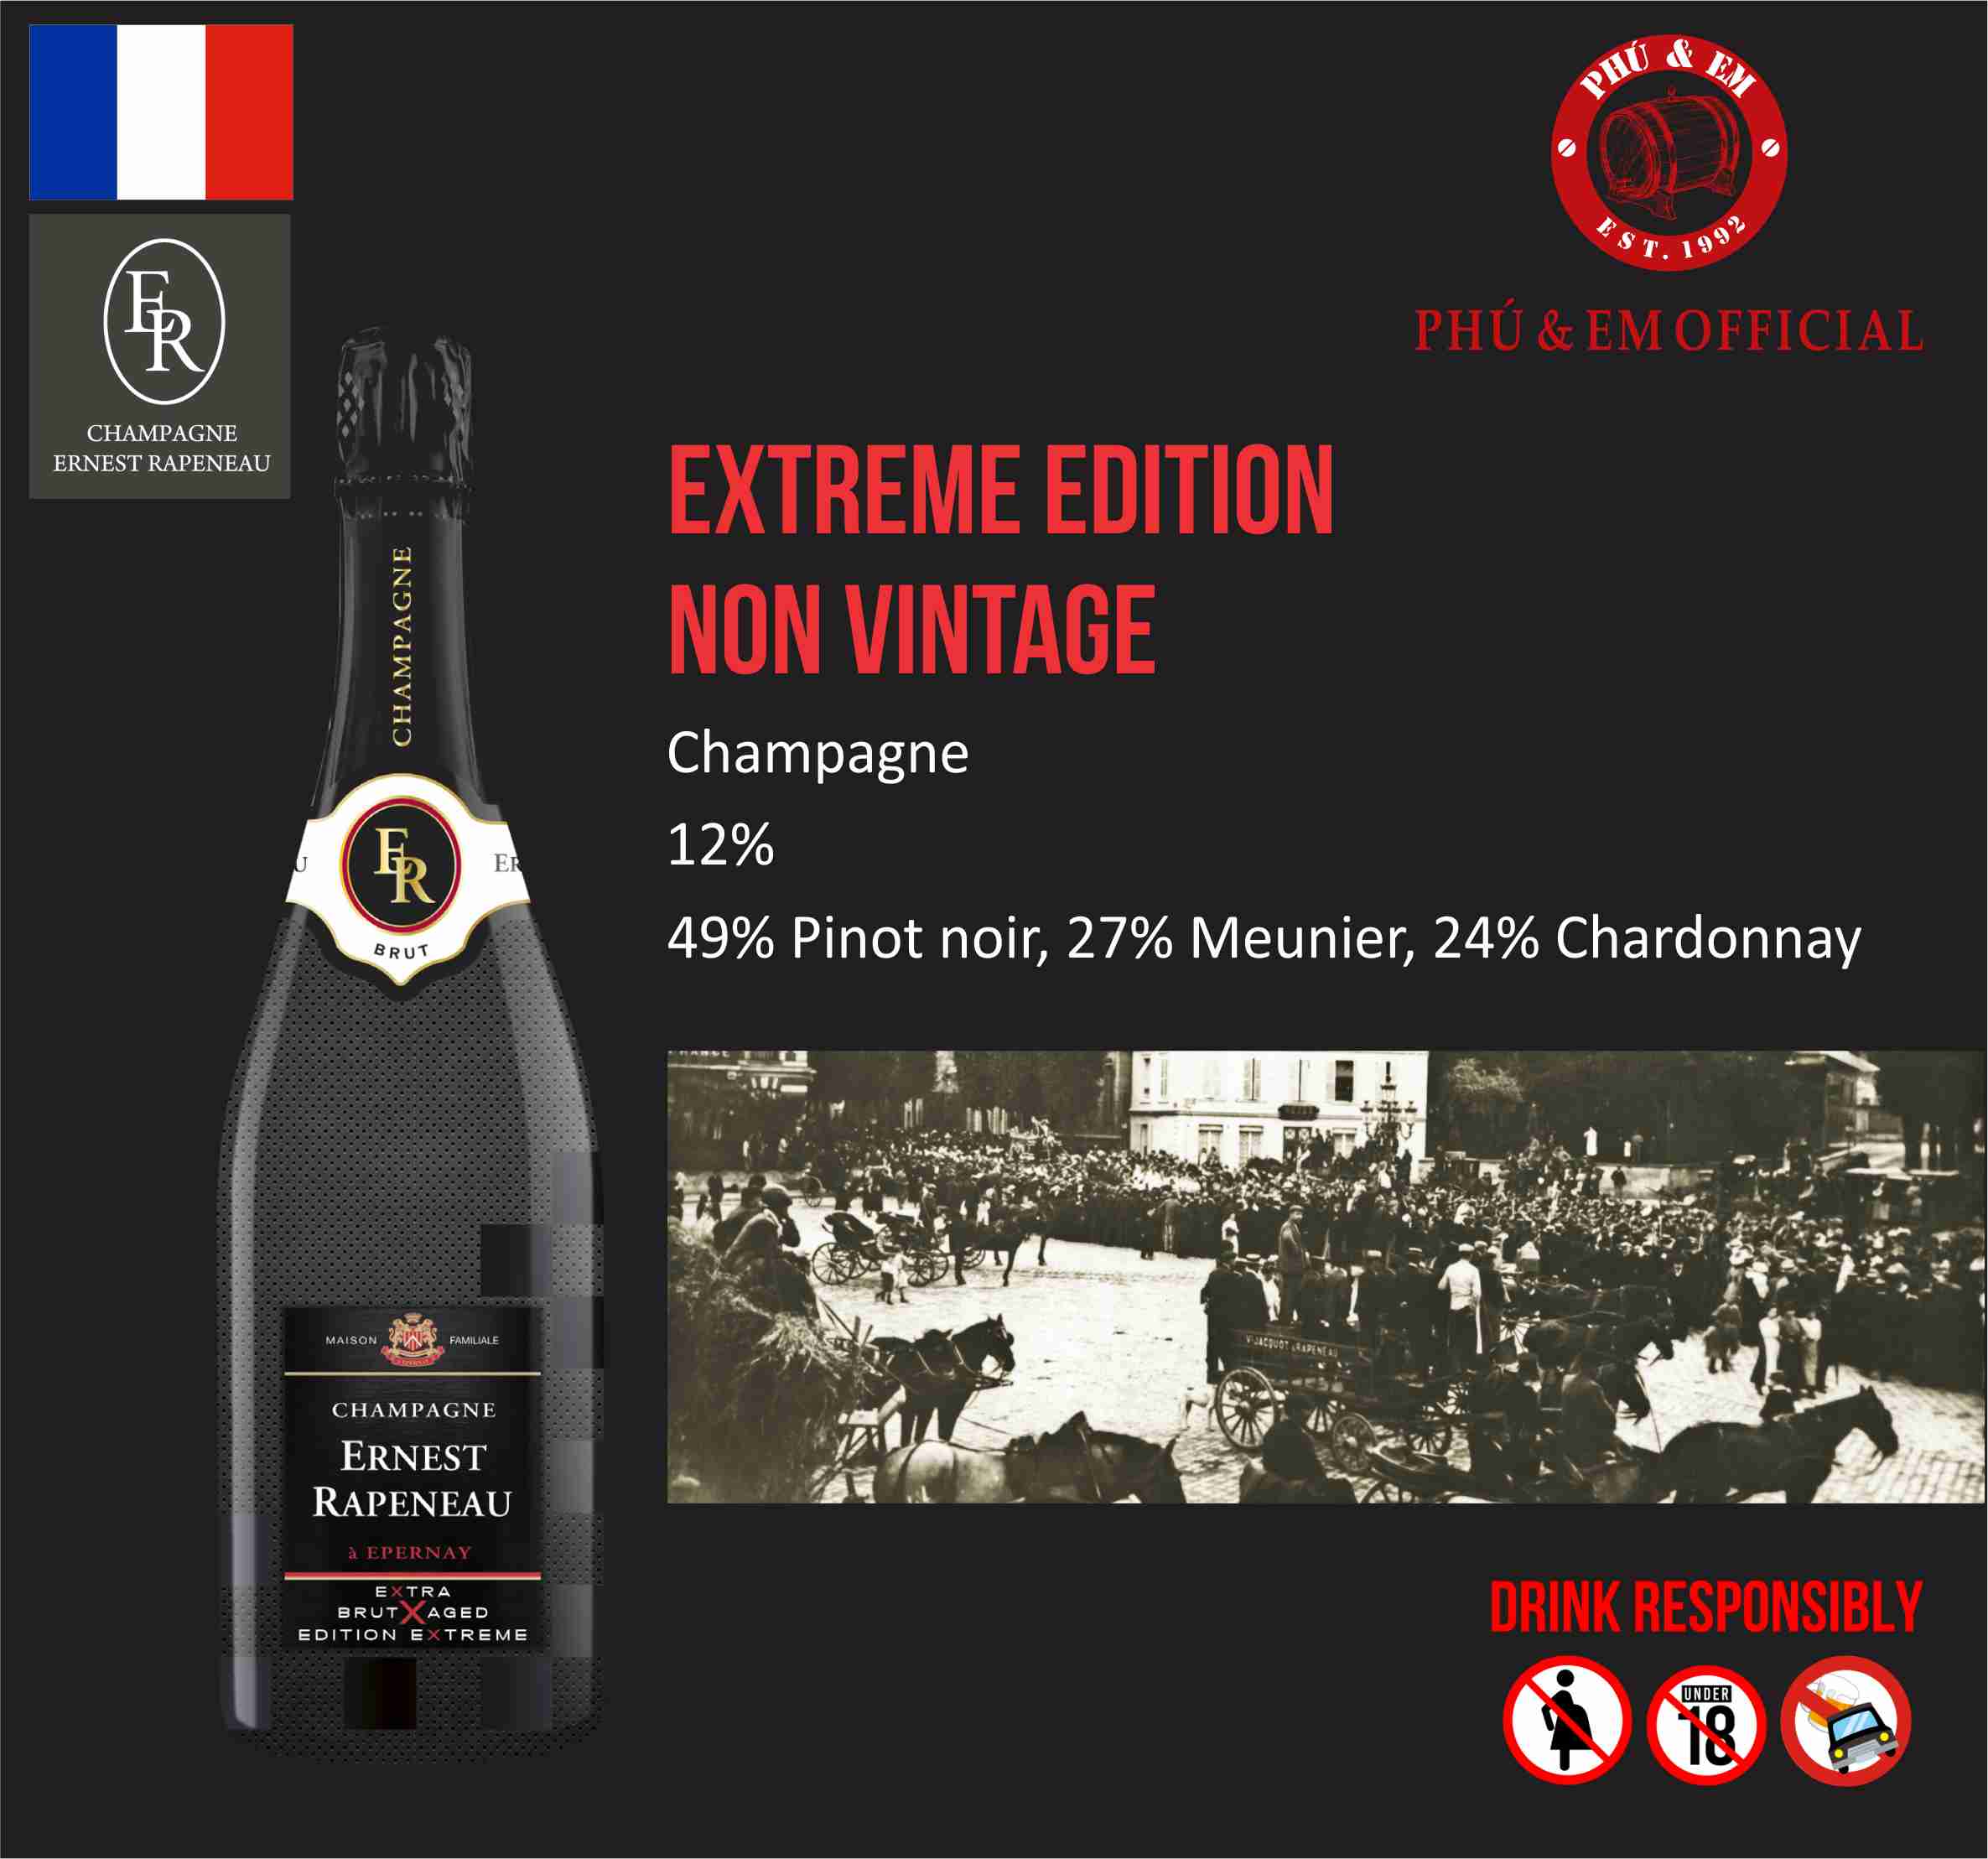 [Mua 01 Tặng 01] - Rượu Champagne Pháp Ernest Rapeneau Extra Brut Edition Extreme